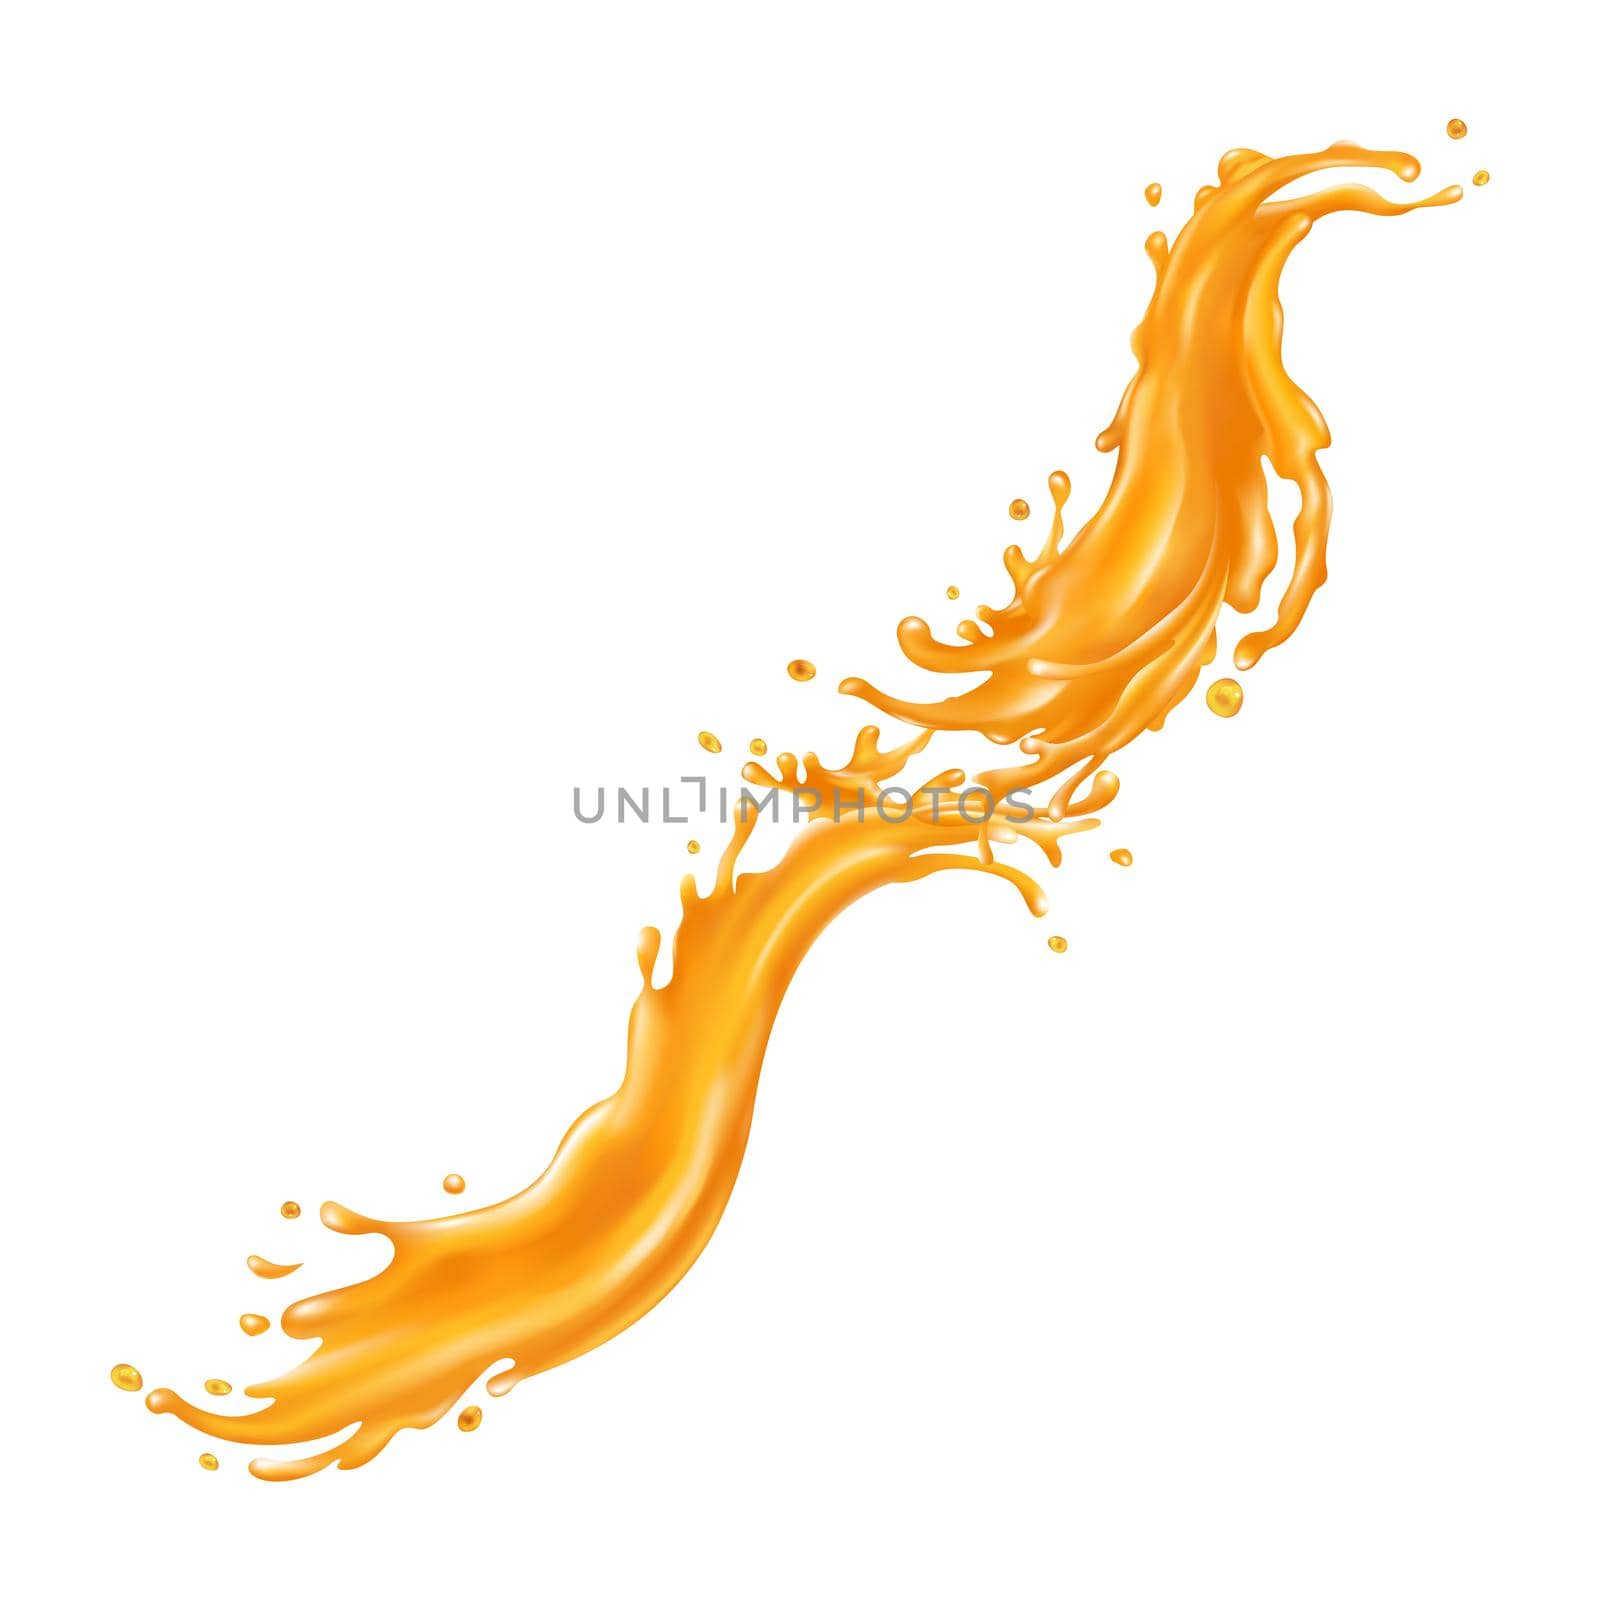 Orange juice dynamic splash. Illustration in realistic style.